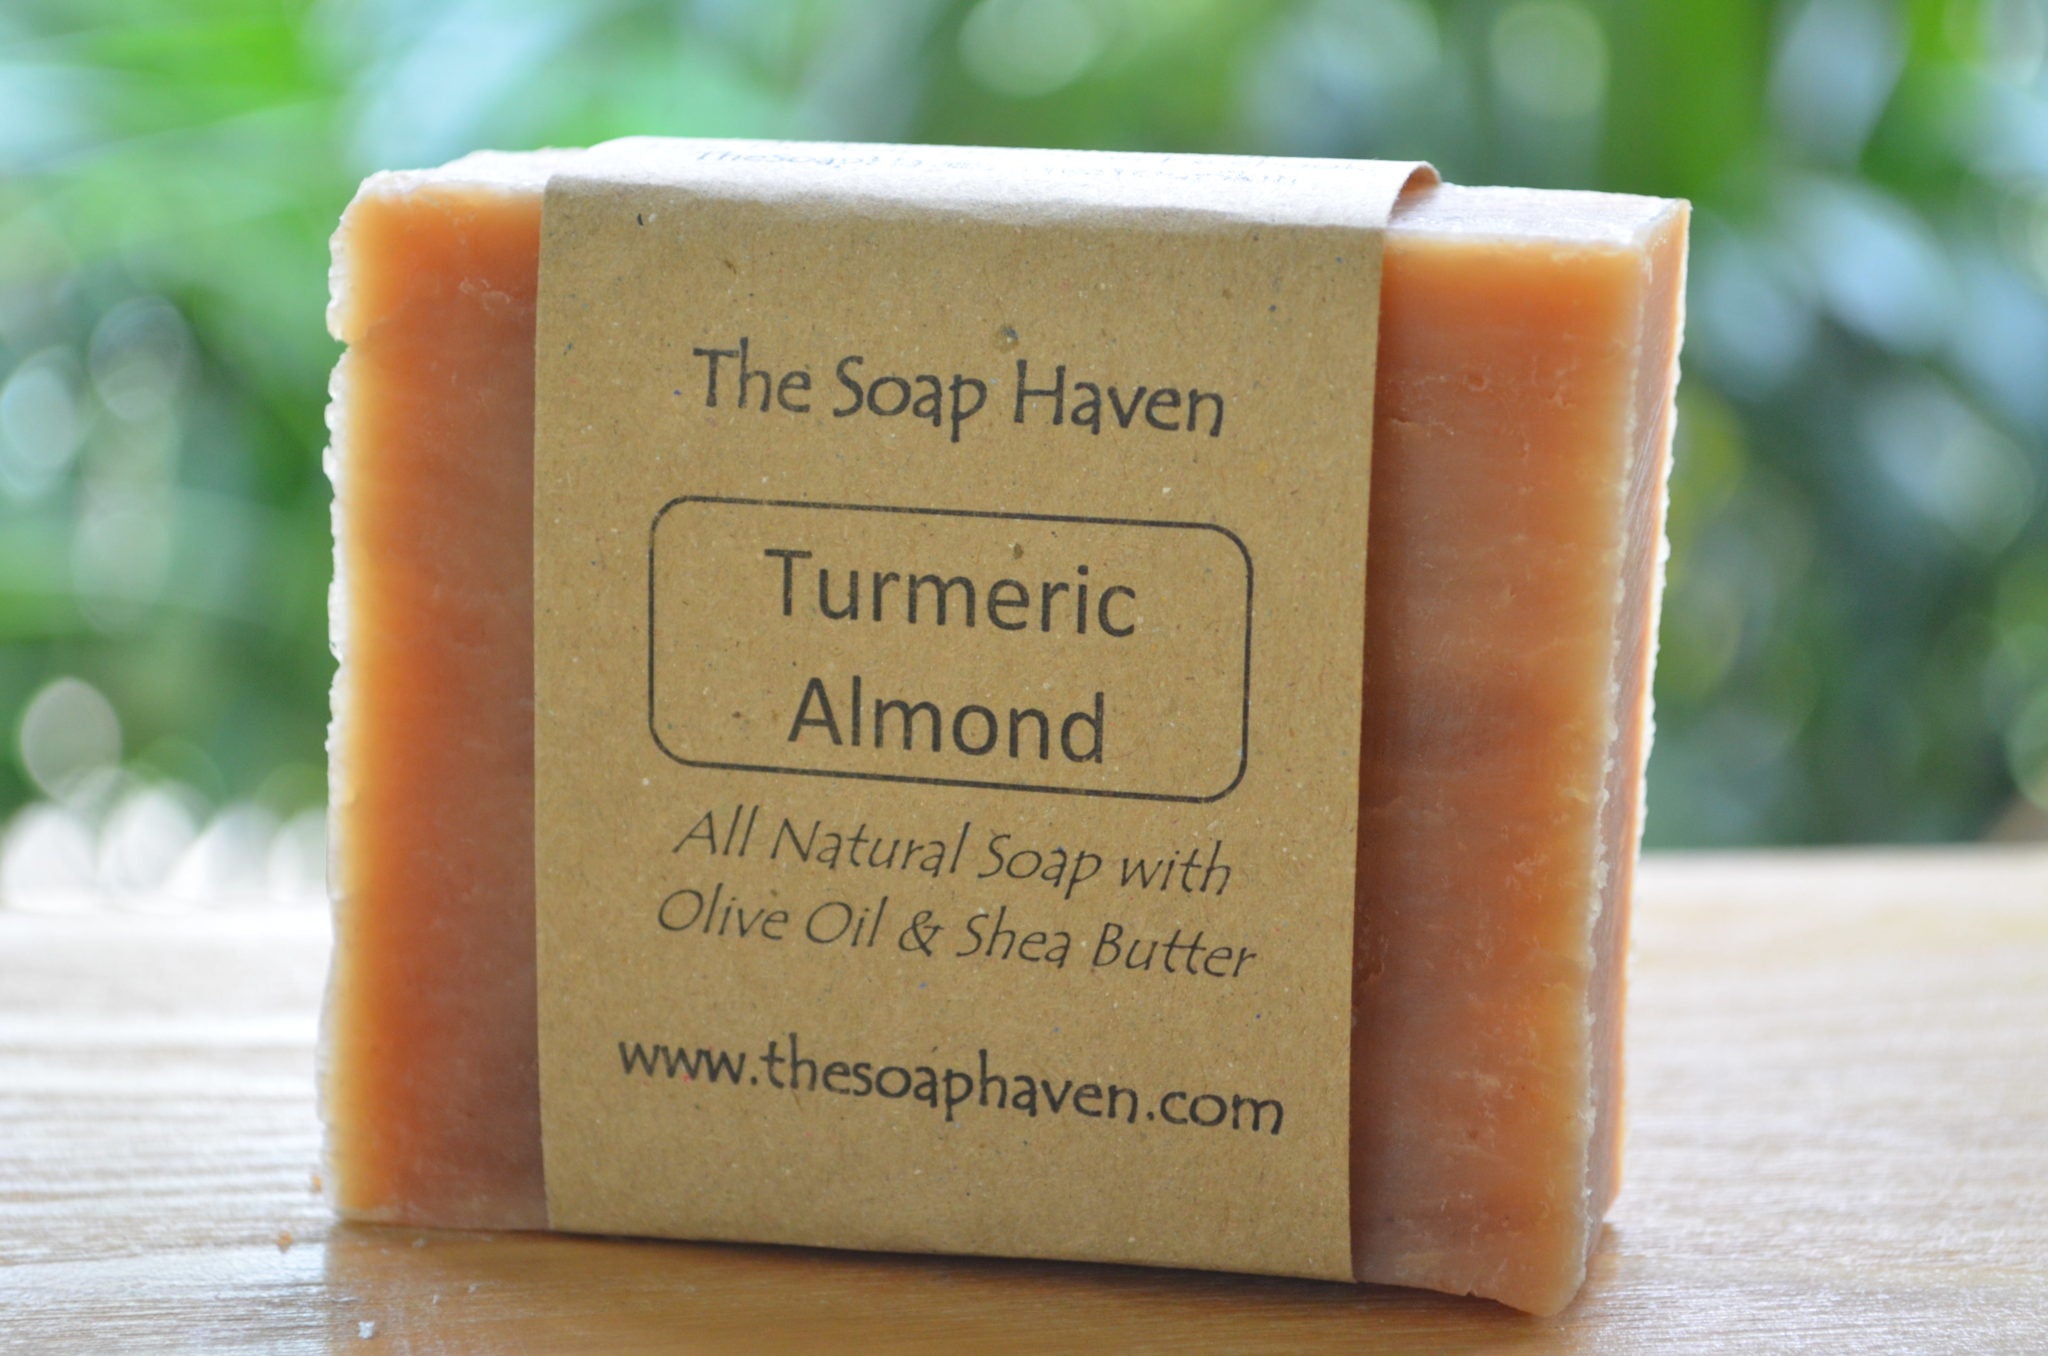 The Soap Haven Turmeric Almond soap bar